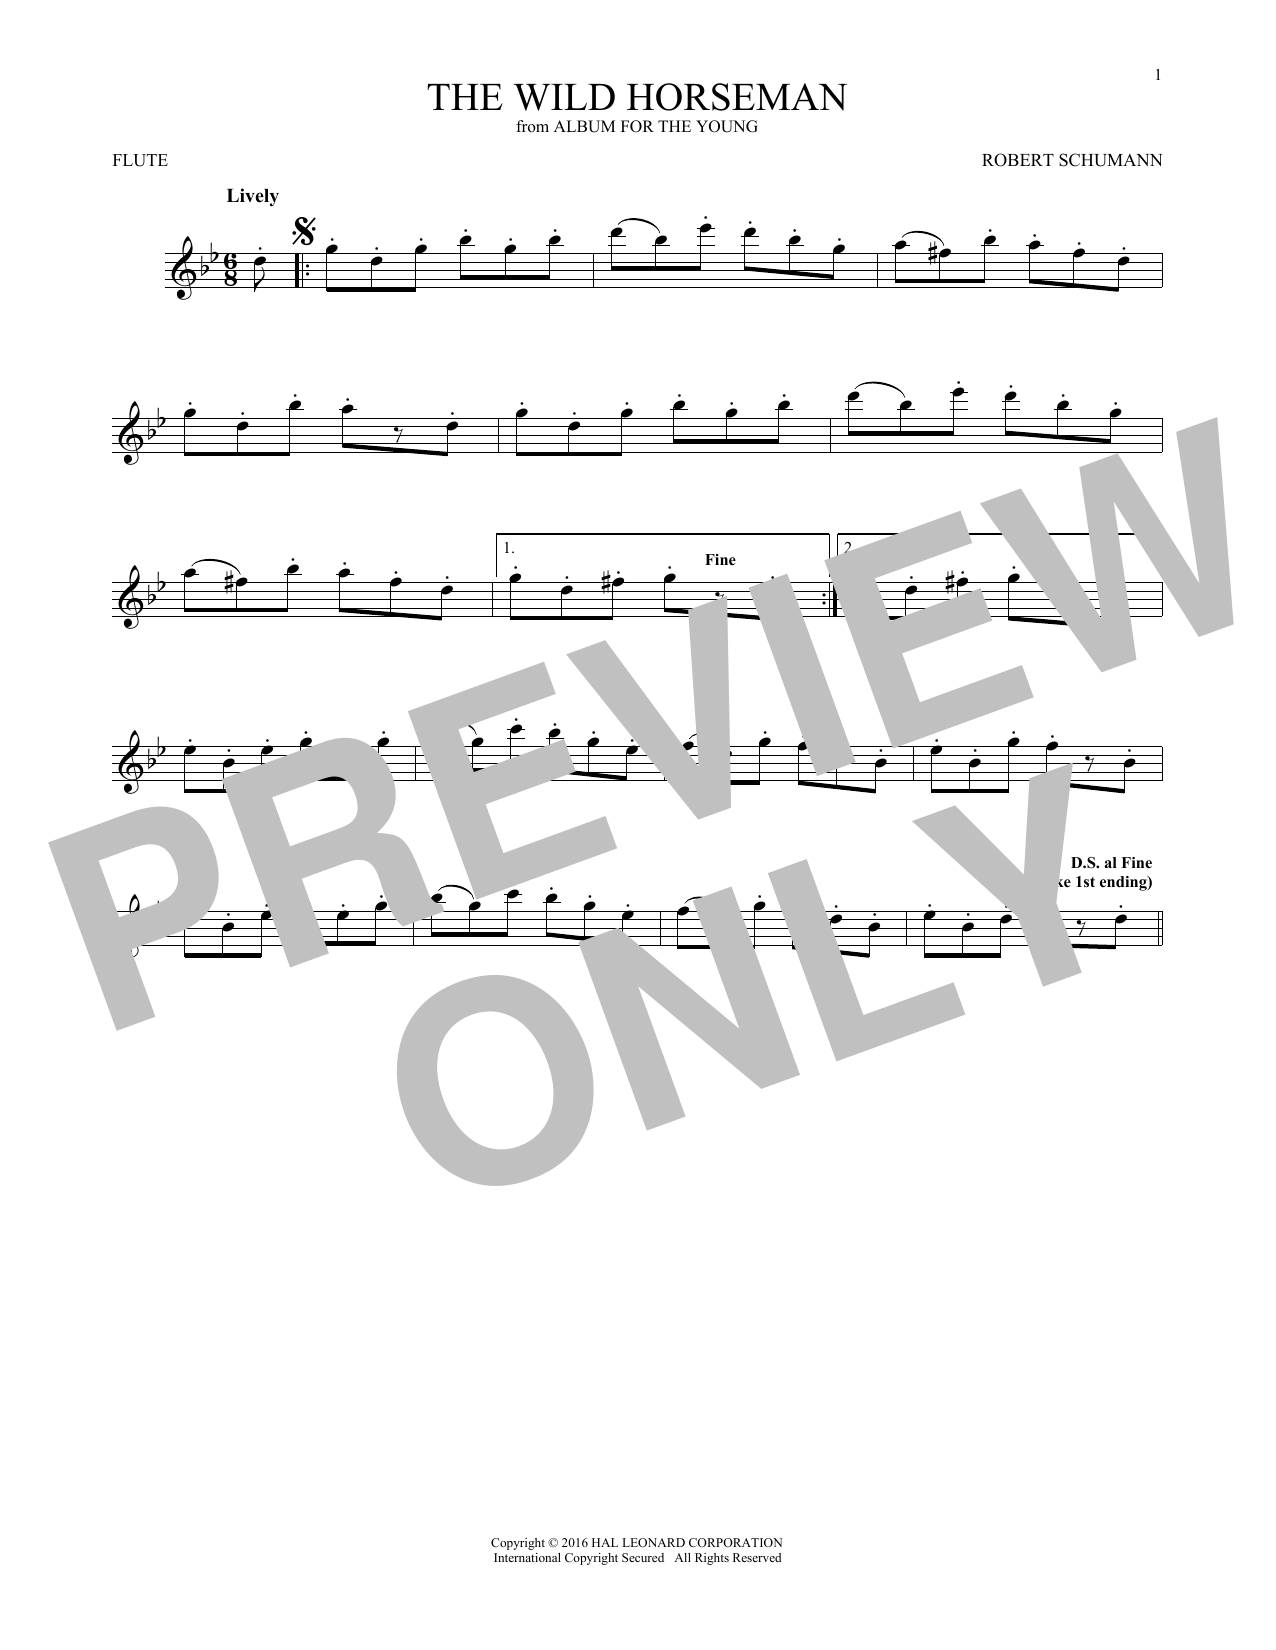 Robert Schumann The Wild Horseman (Wilder Reiter), Op. 68, No. 8 Sheet Music Notes & Chords for Flute - Download or Print PDF